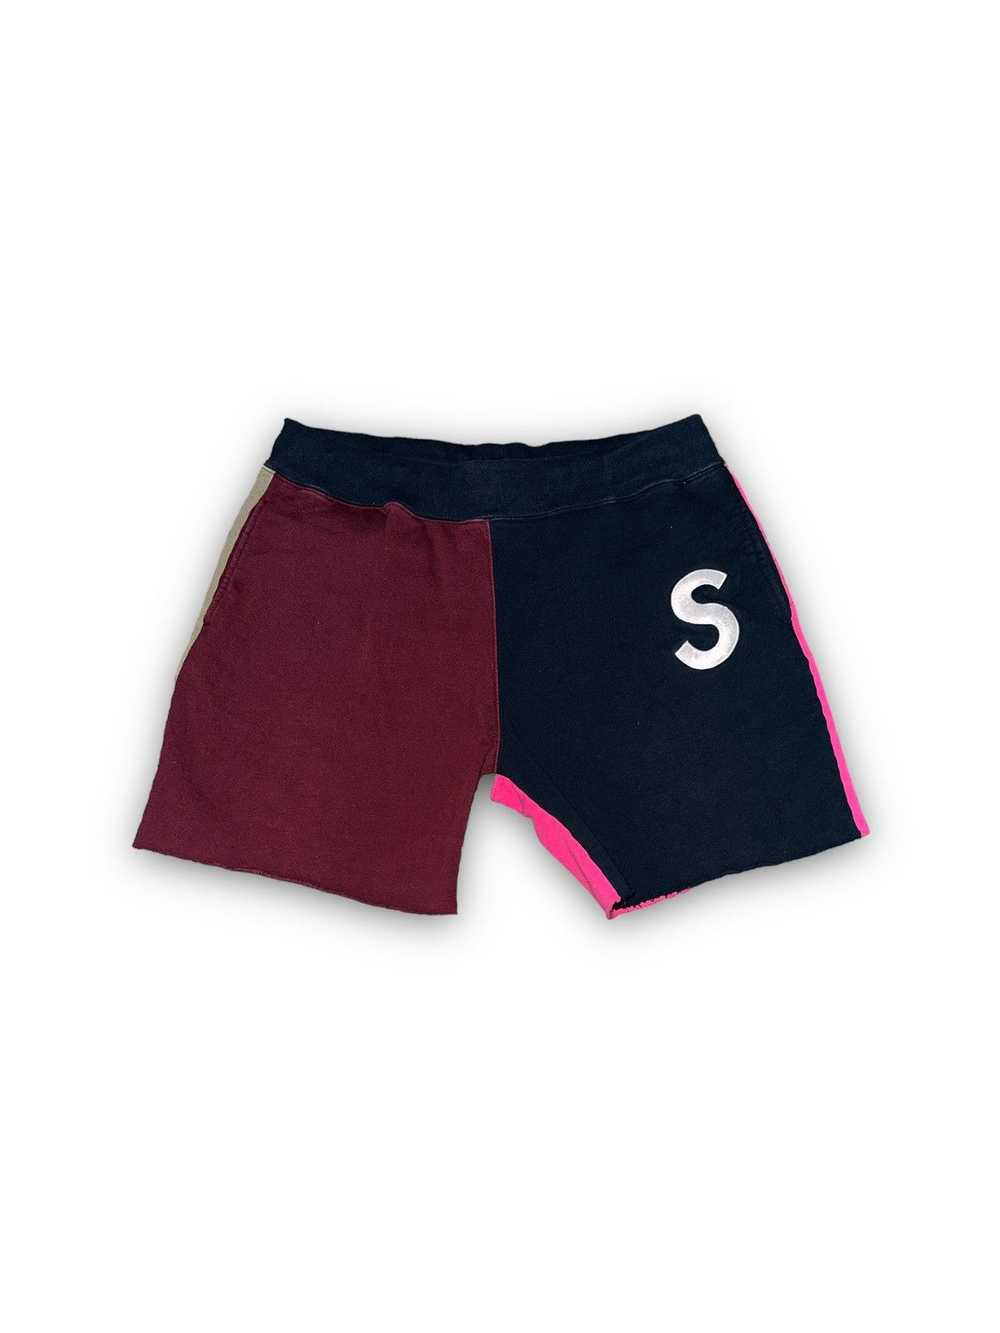 Supreme Supreme S logo color block shorts - image 1